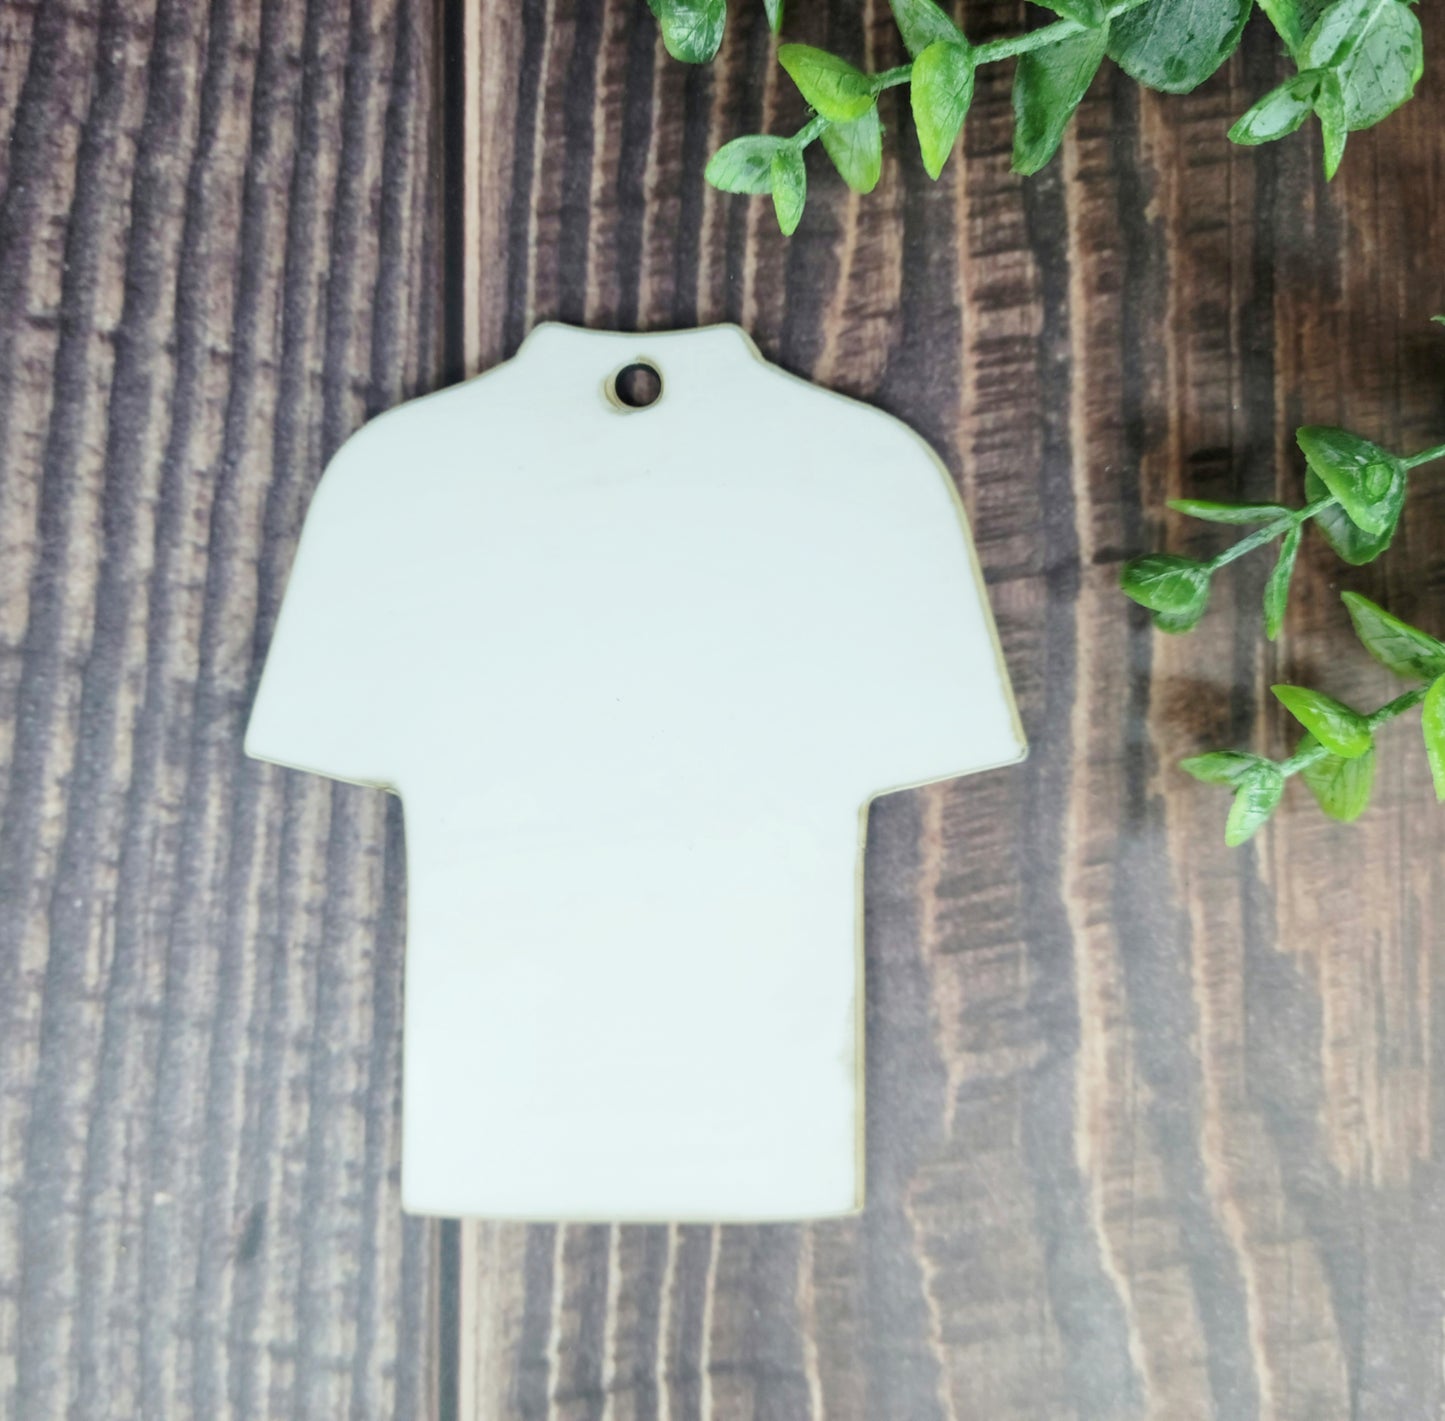 Set of 5 or 10 Shirt ornament hardboard blanks, 4" T-shirt sublimation hardboard blank, SINGLE or DOUBLE-sided t shirt ornament sublimation blank